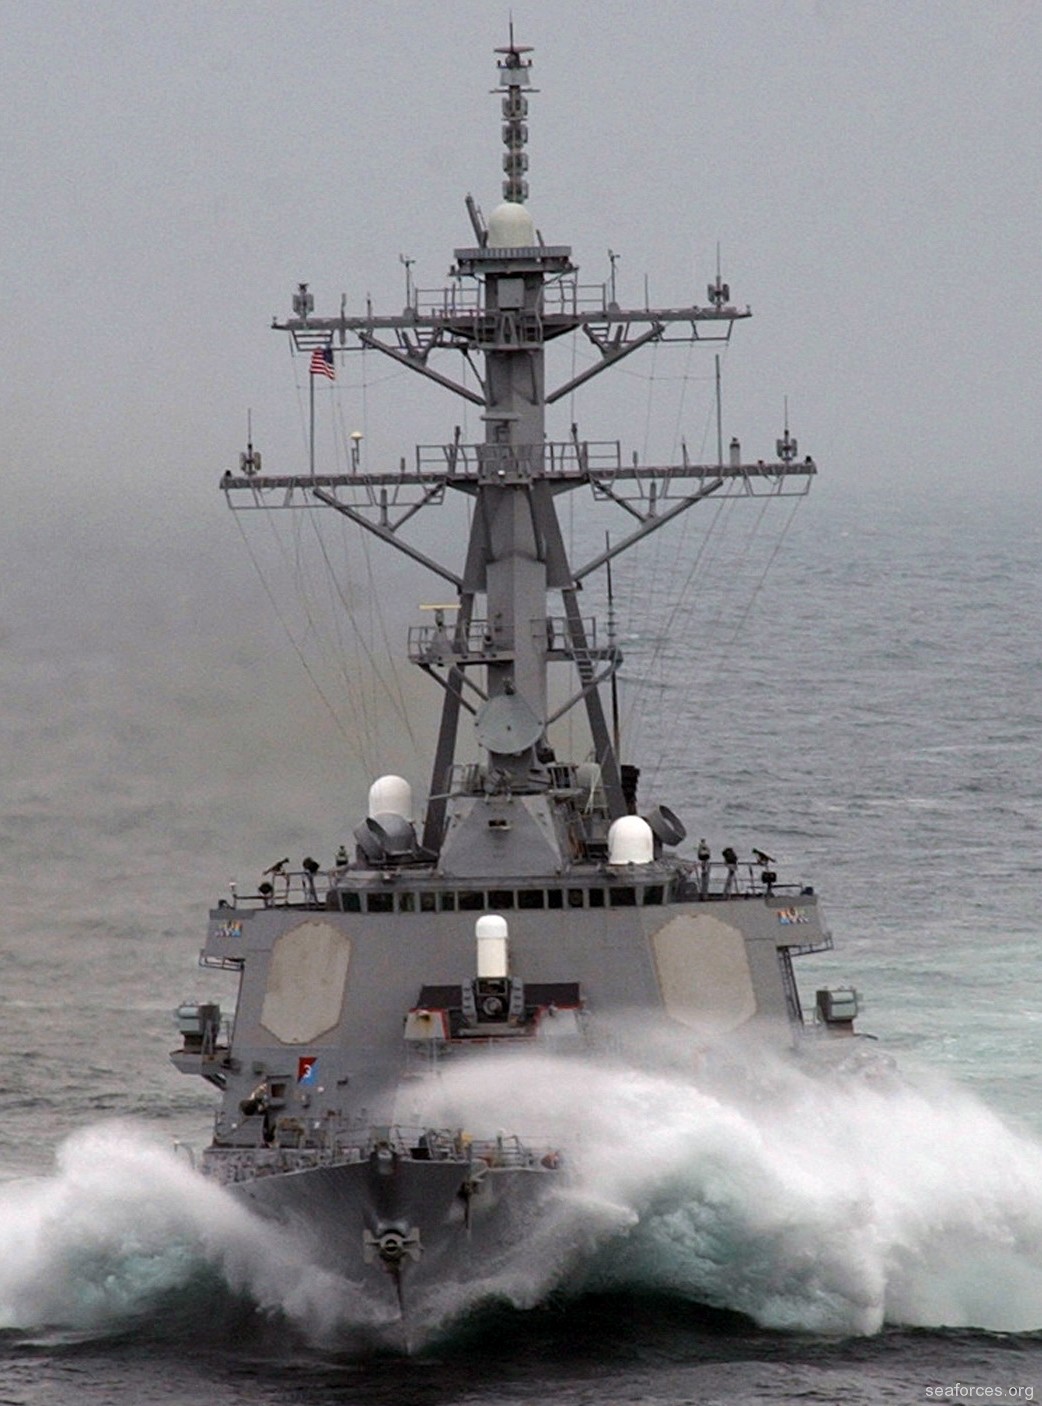 ddg-52 uss barry guided missile destroyer us navy 76